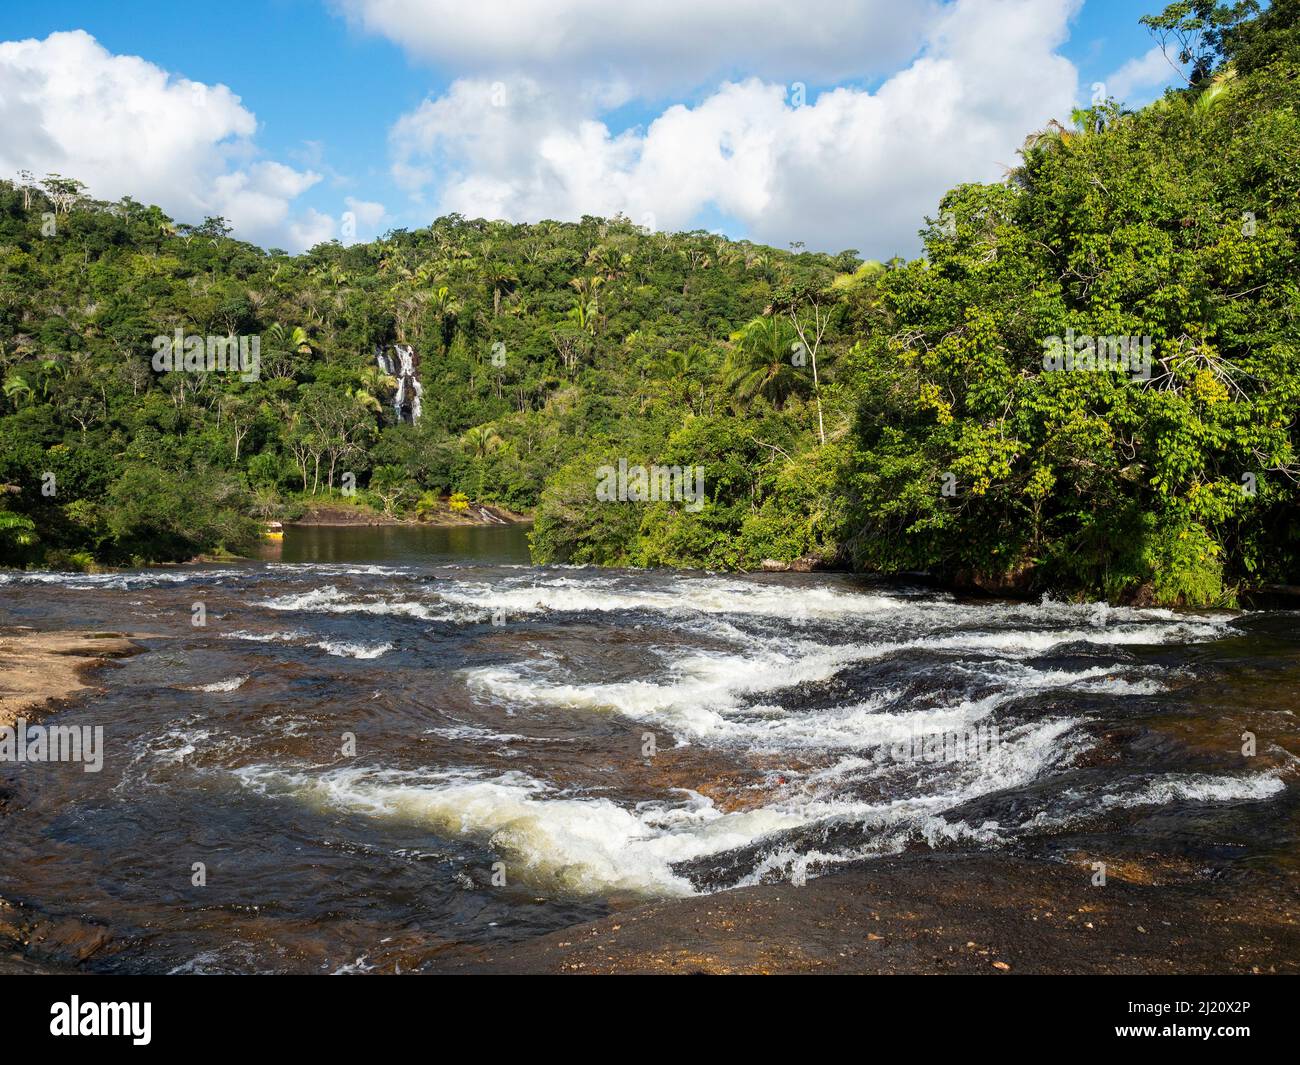 River in coastal rainforest, Mata Atlantica, Bahia, Brazil. Stock Photo